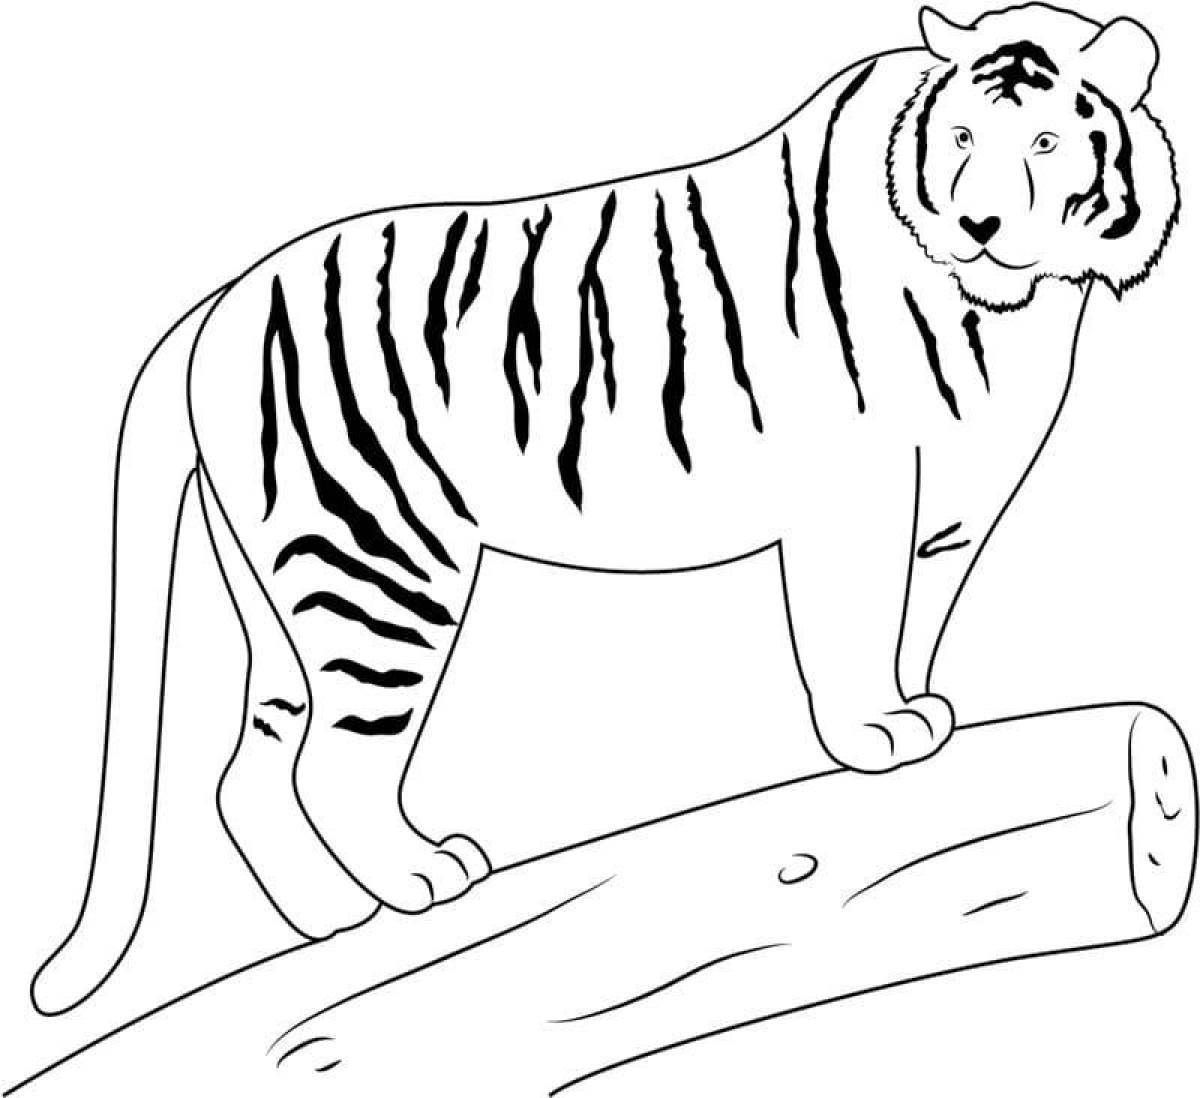 Coloring page elegant siberian tiger